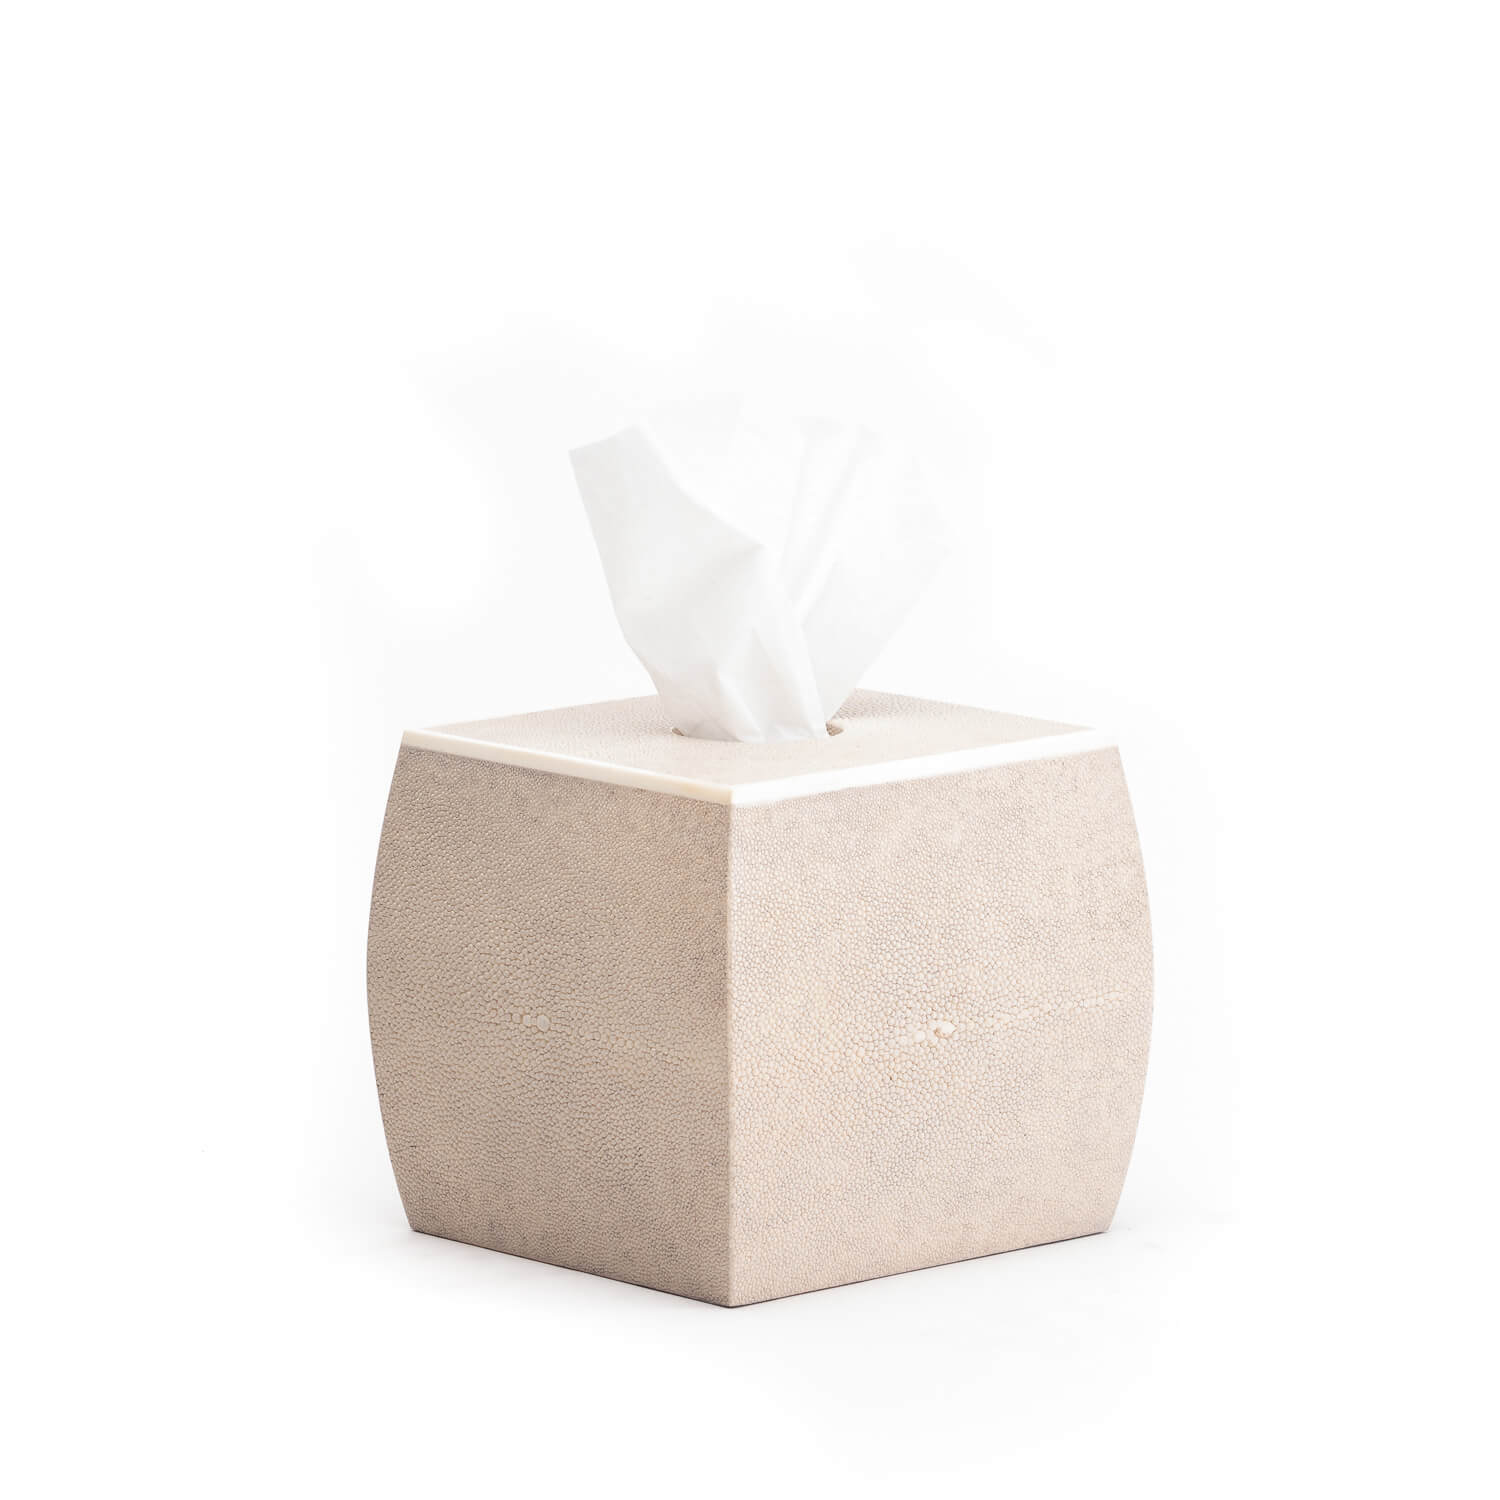 Designer Curved Shagreen Tissue Box